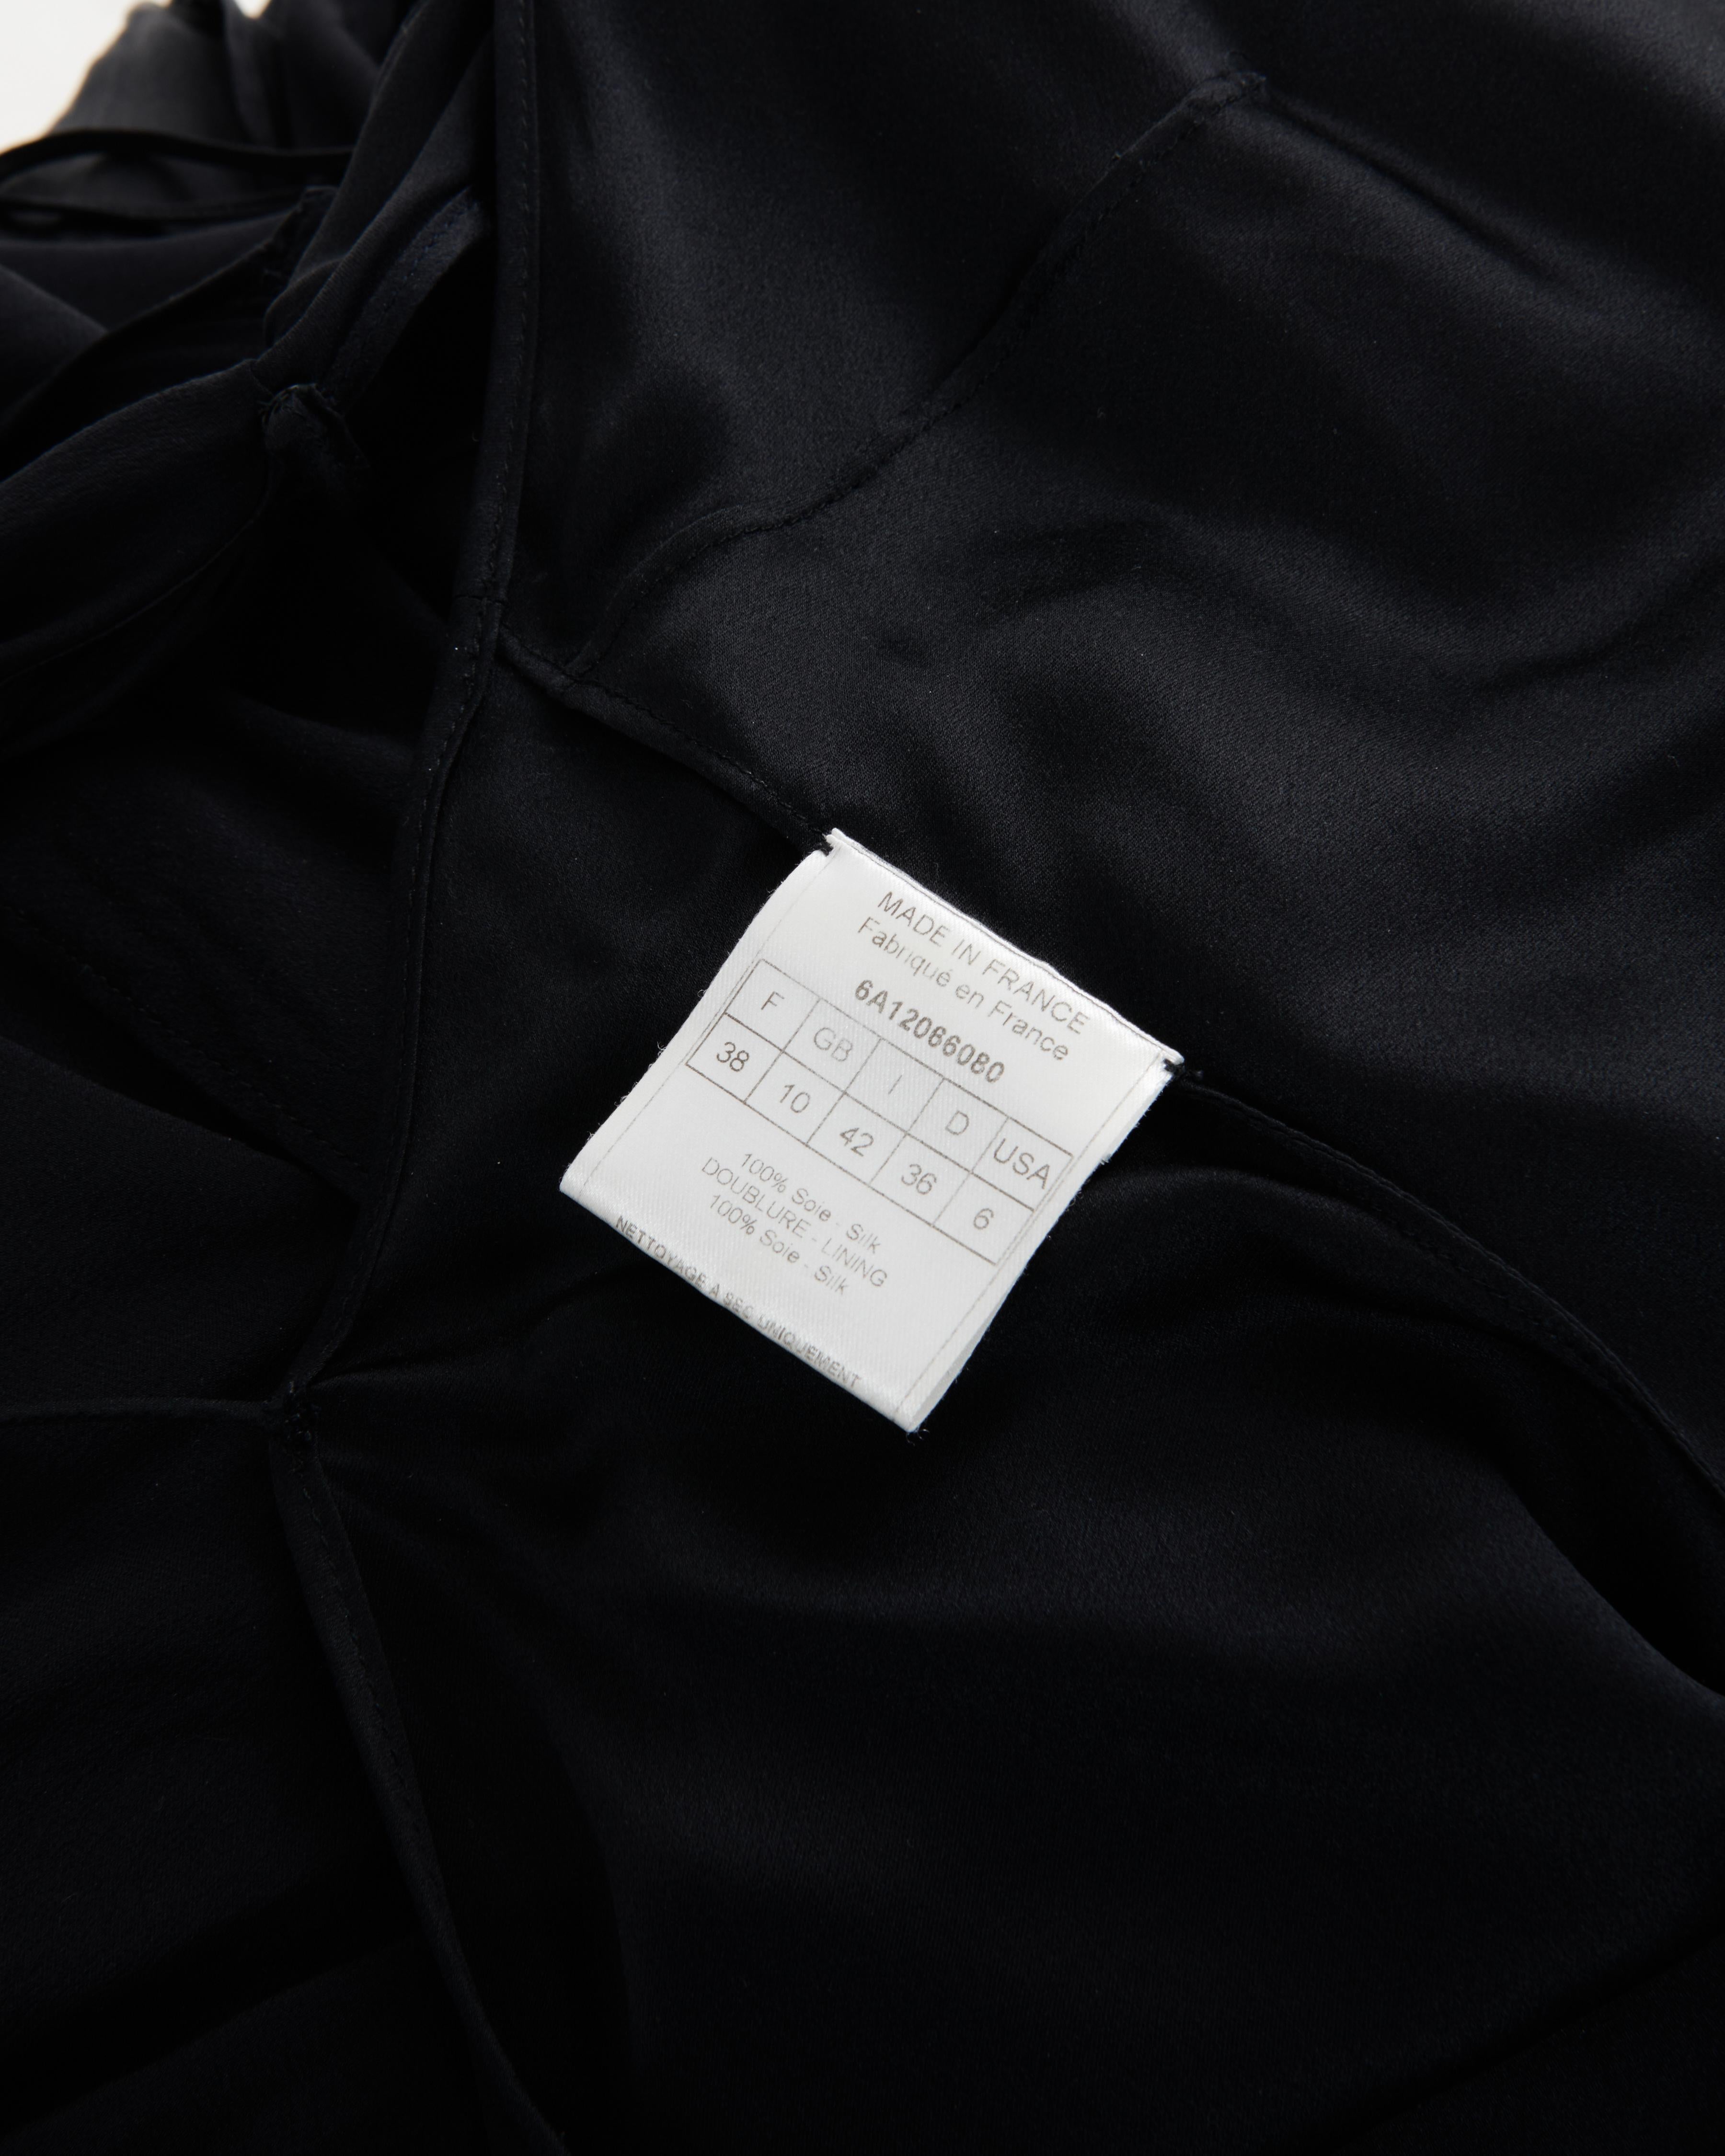 Christian Dior by John Galliano F/W 2006 Black silk bias-cut evening dress 14